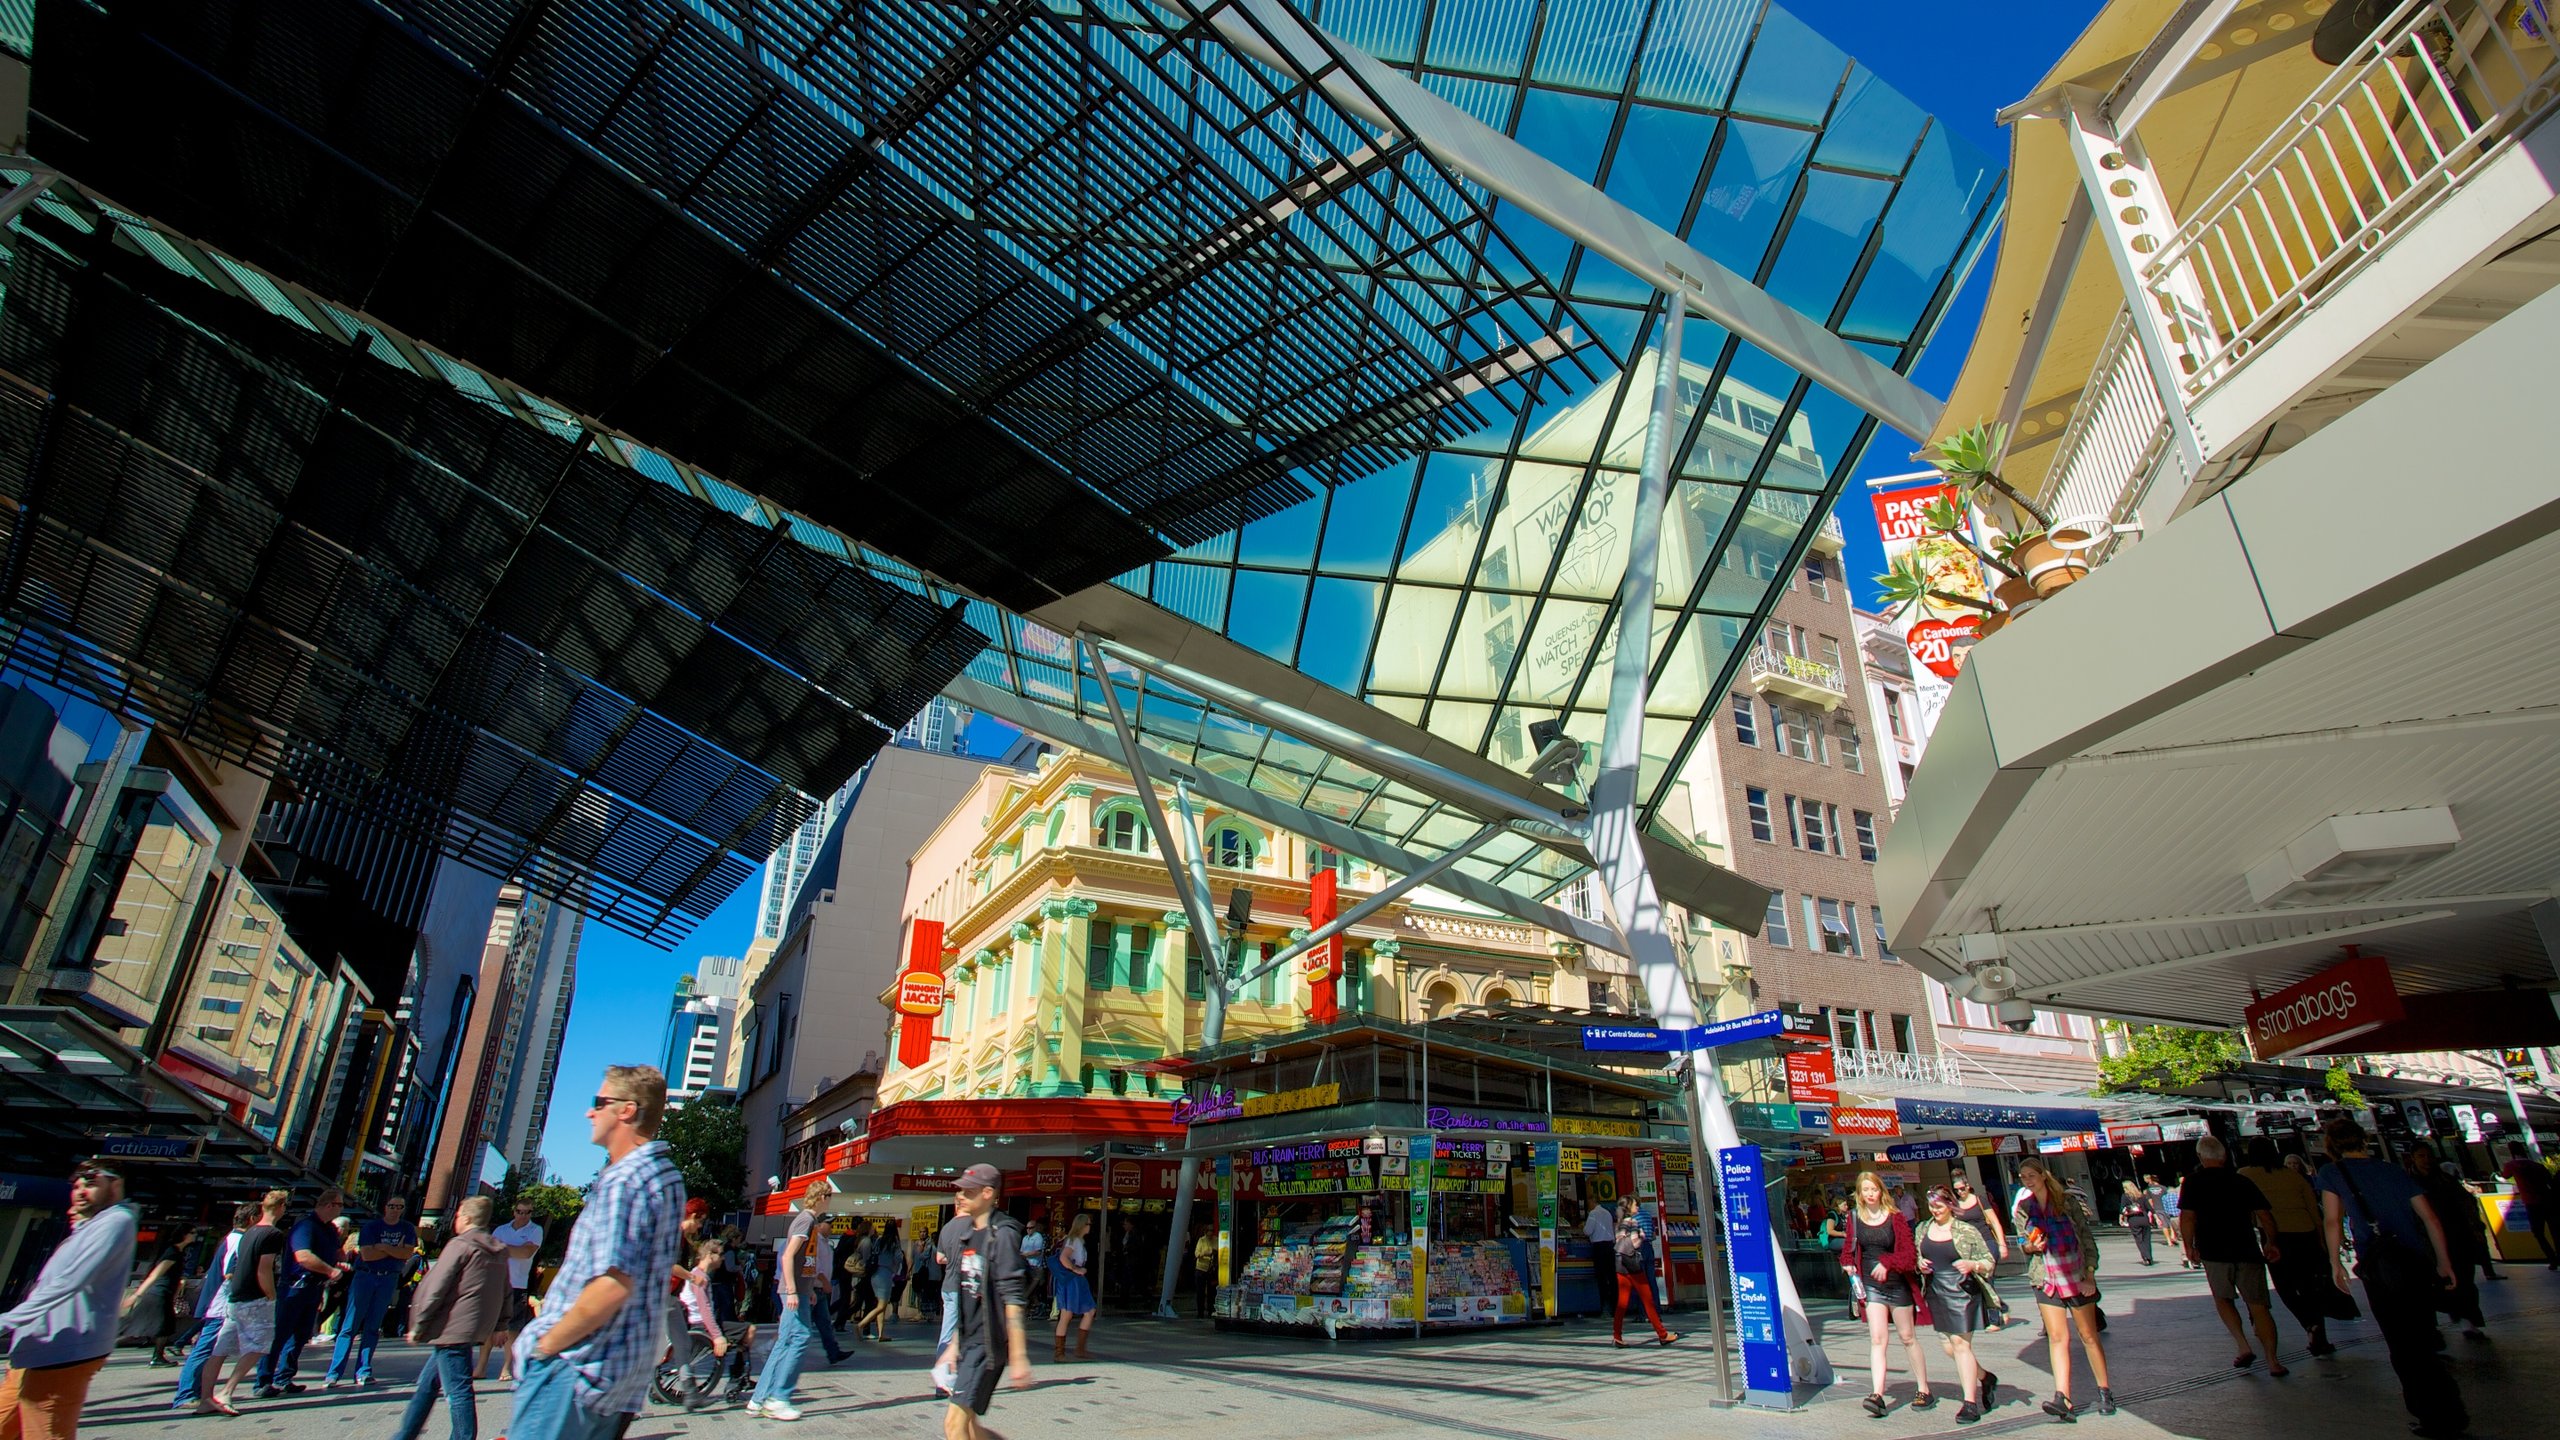 Queen Street Mall in Brisbane